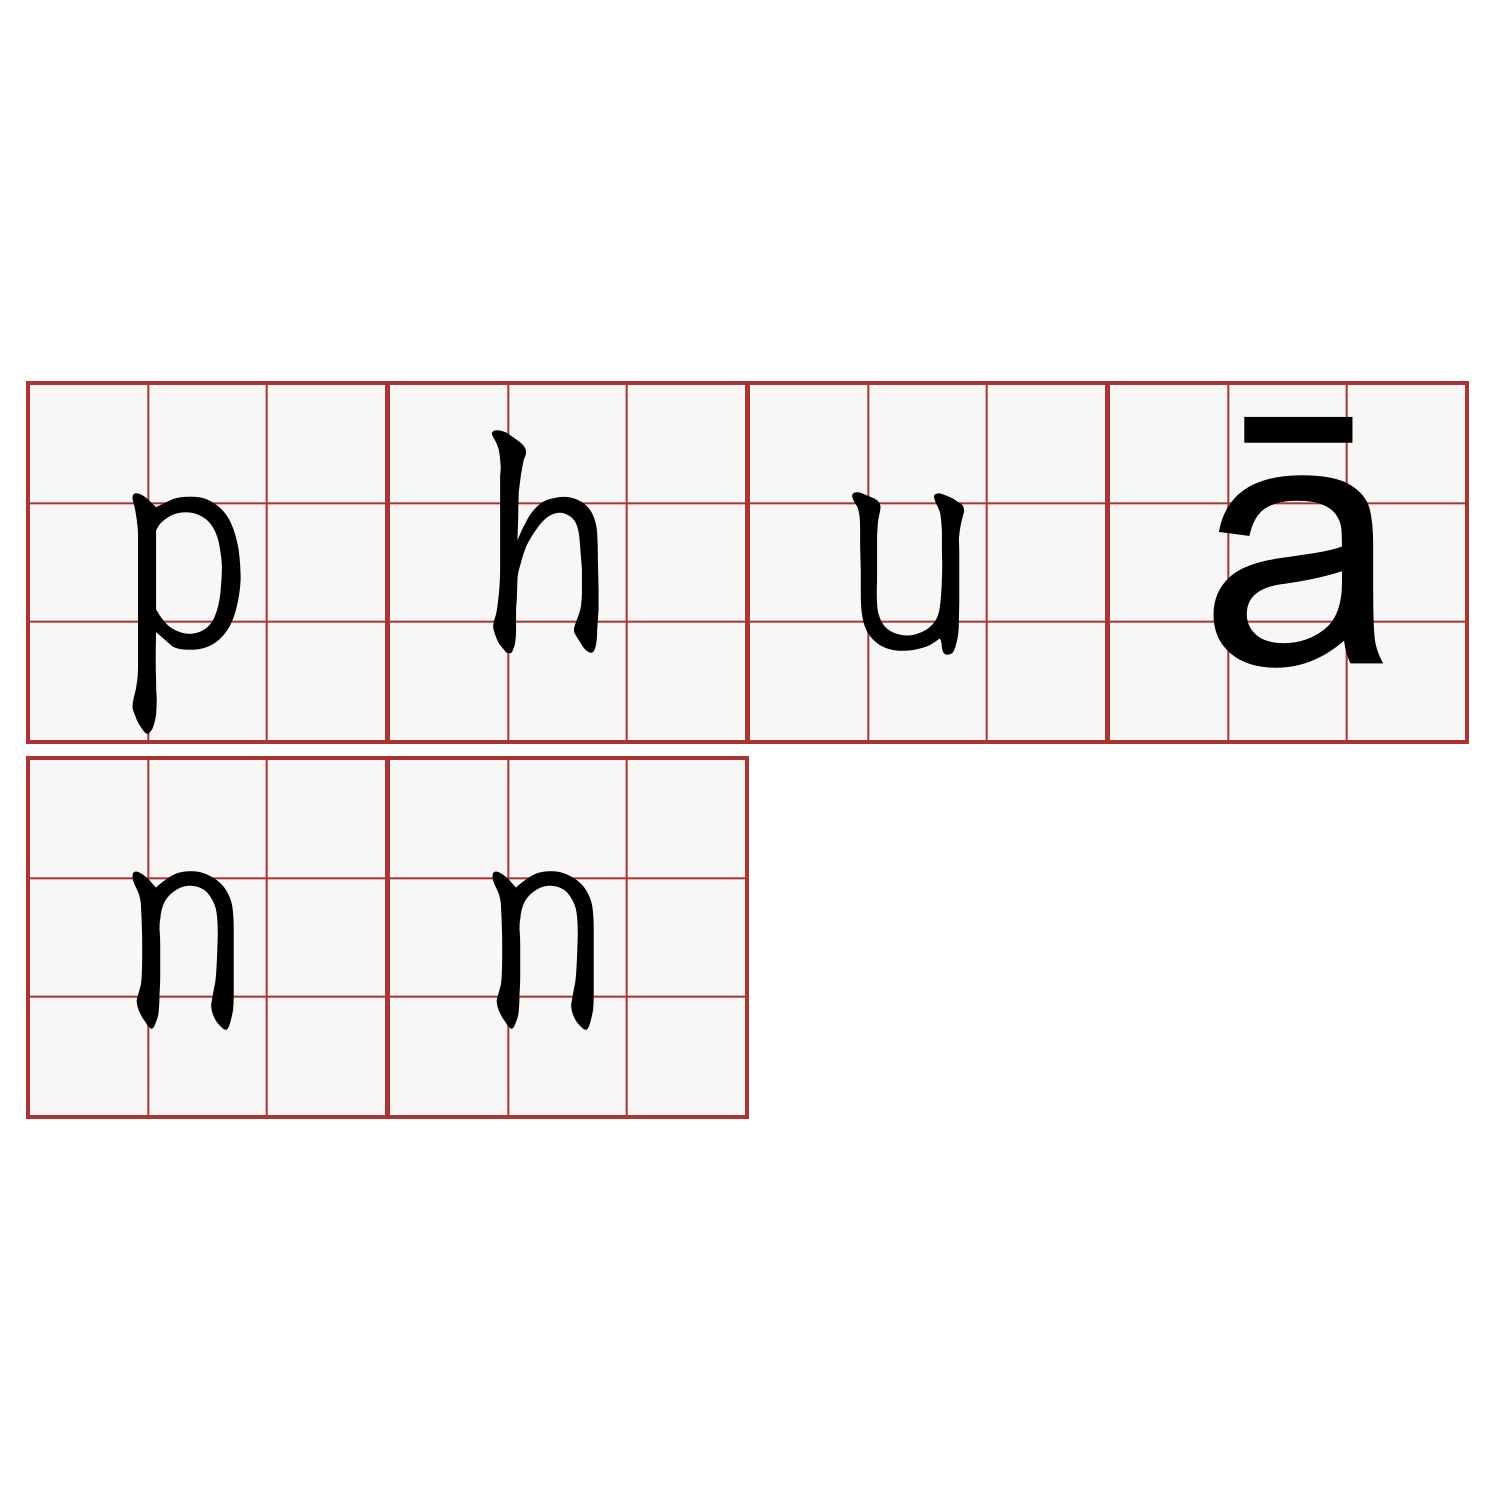 phuānn